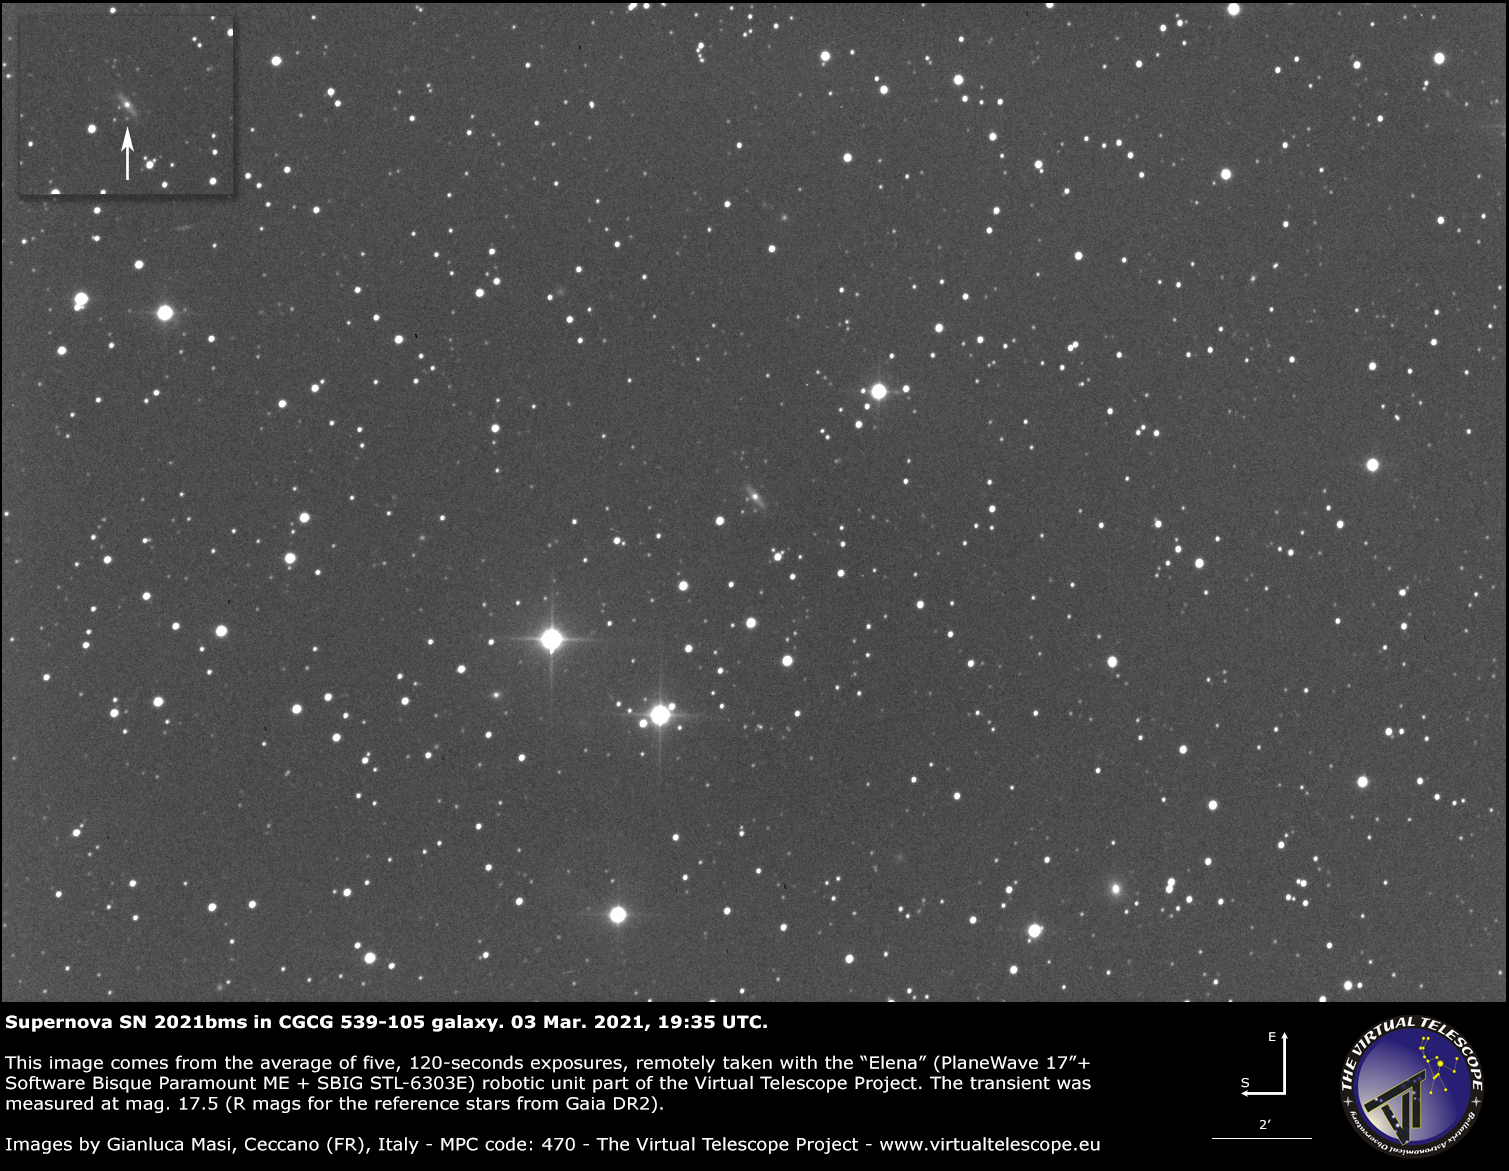 Supernova SN 2021bms in CGCG 539-105 galaxy: 03 Mar. 2021.